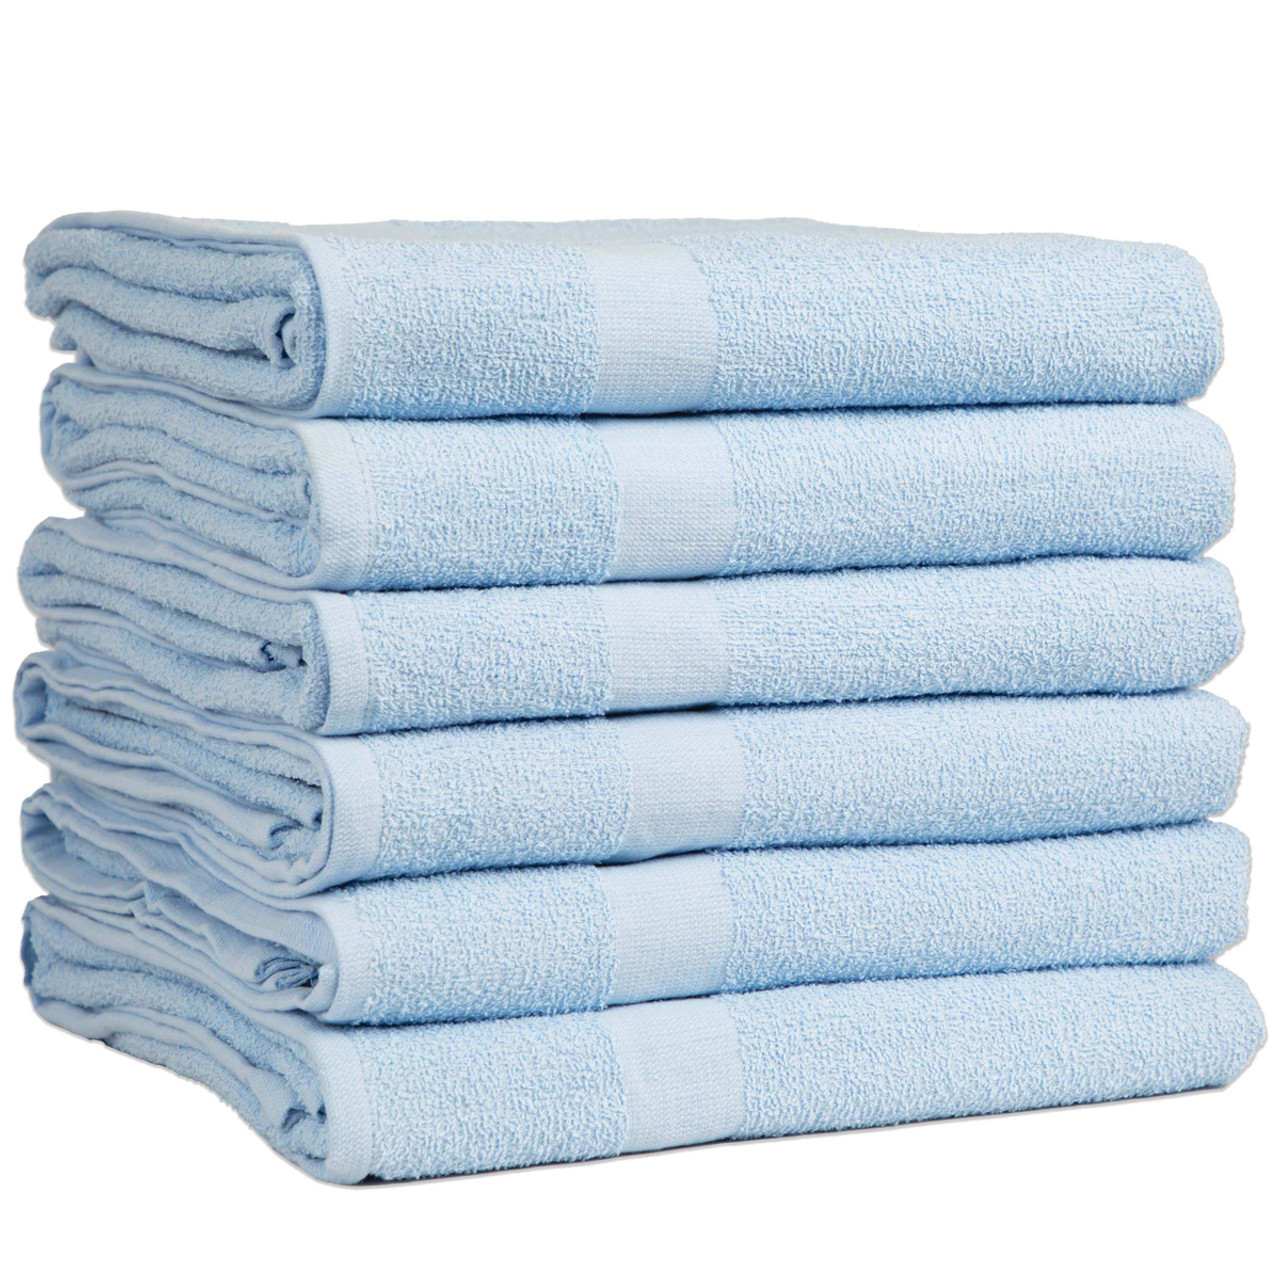 Cotton Terry Bath Towels 27x52 White